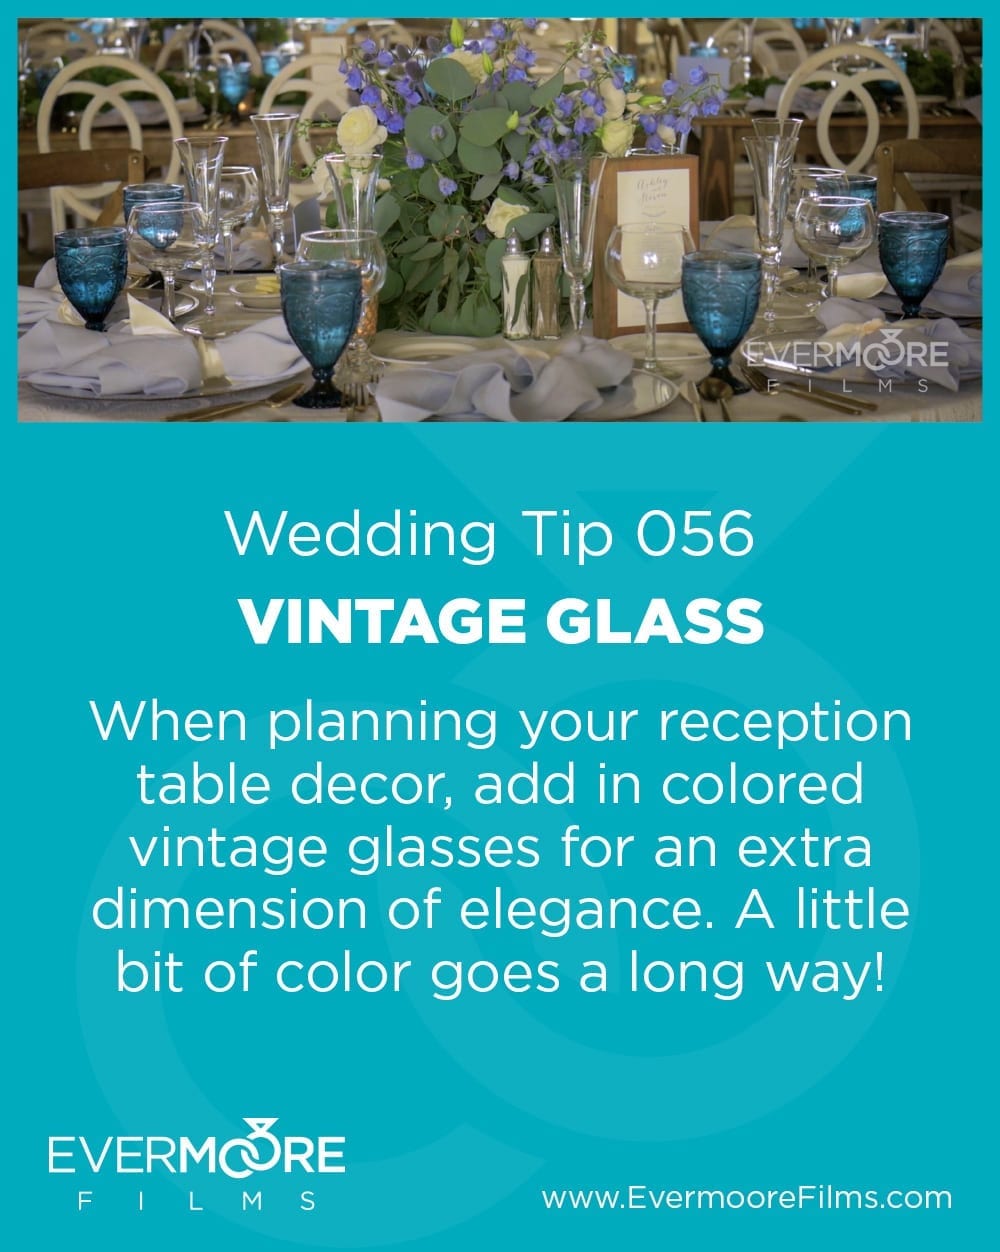 Vintage Glass | Wedding Tip 056 | Evermoore Films